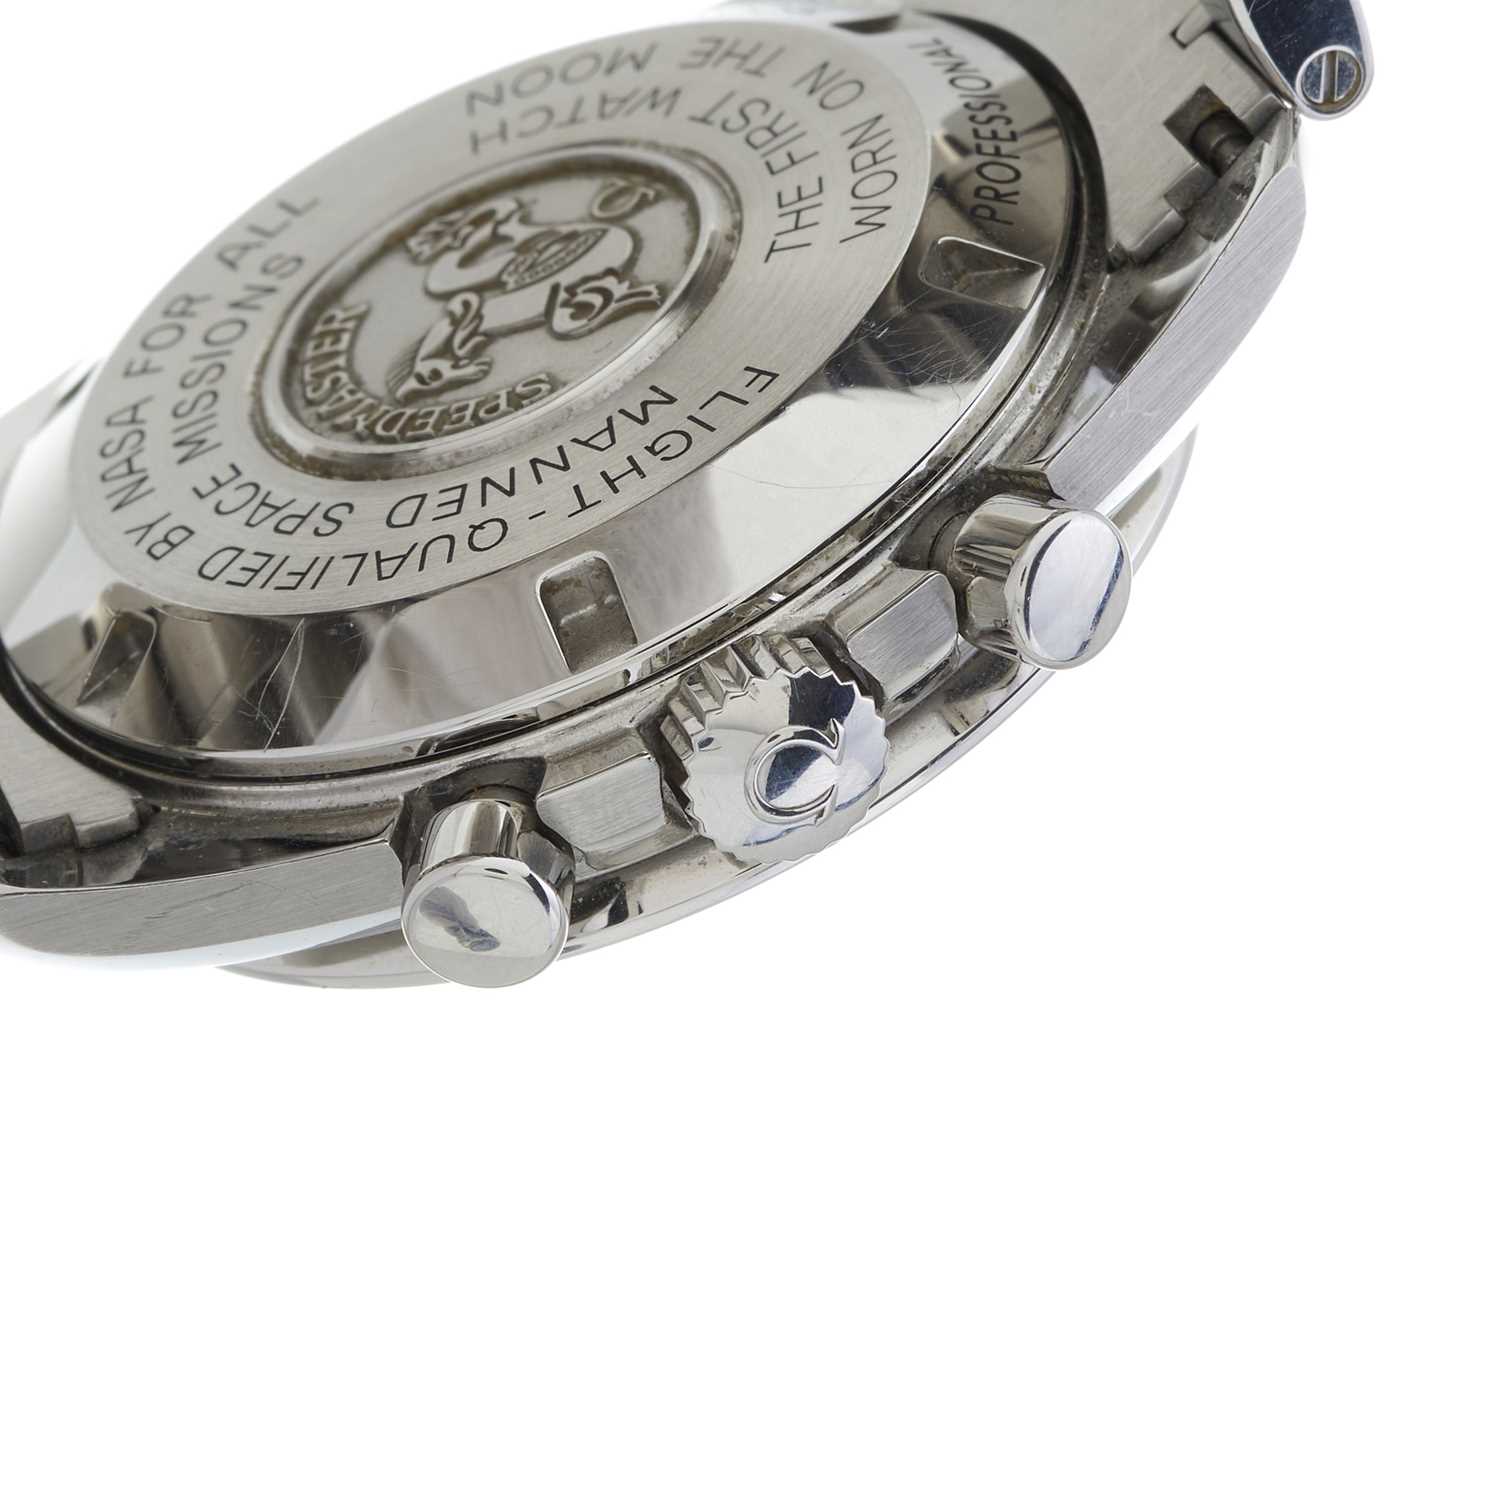 Omega, a stainless steel Speedmaster bracelet watch - Image 3 of 3